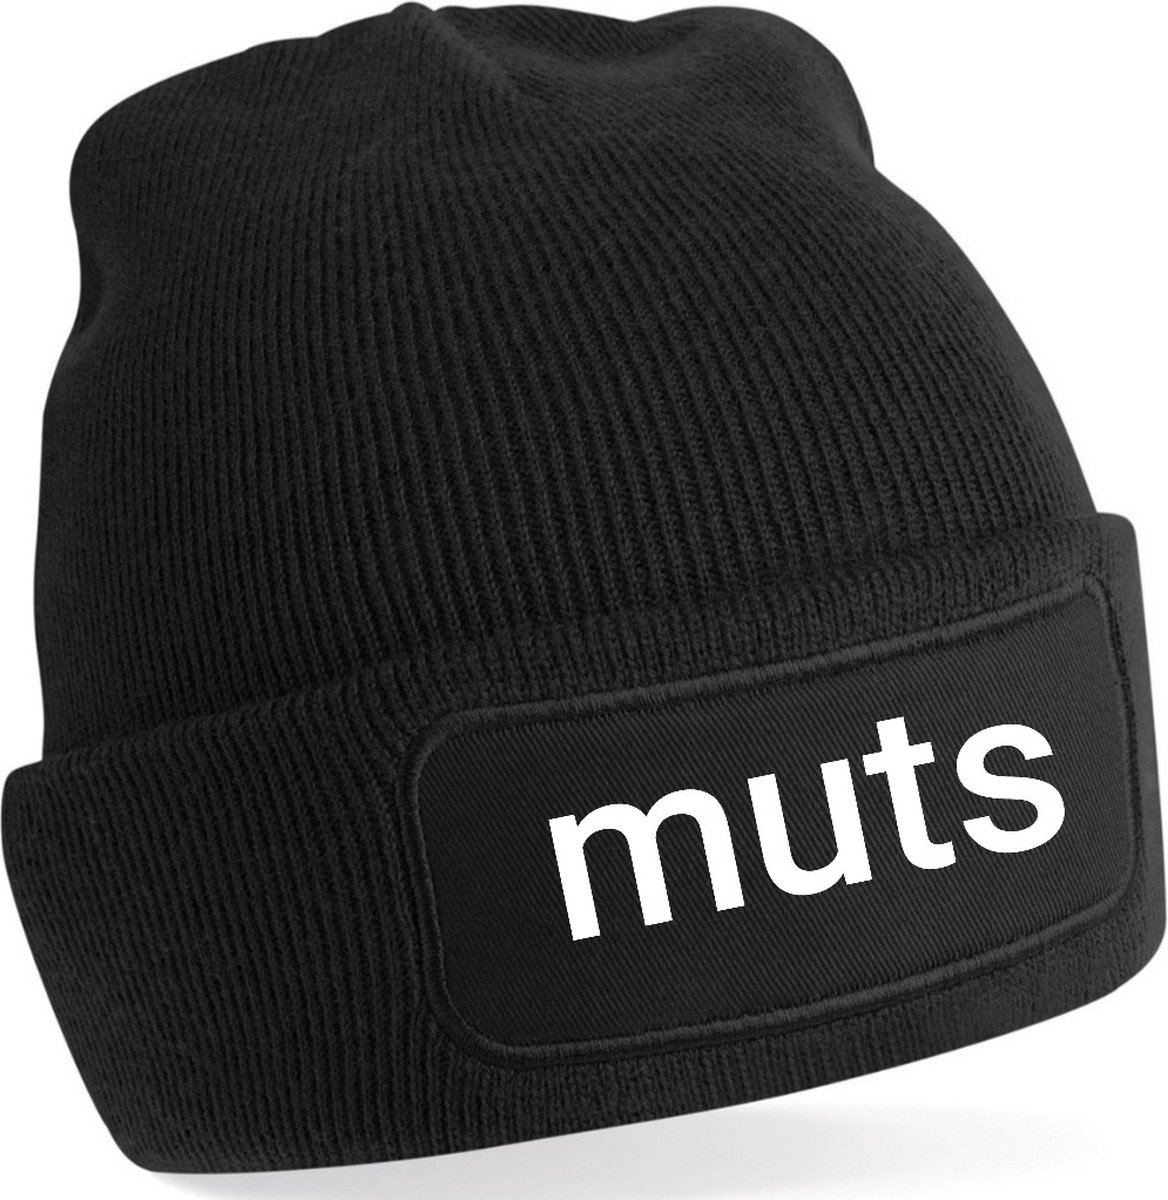 Muts - Beanie - Muts - feestdagen - winter - zwart met witte opdruk